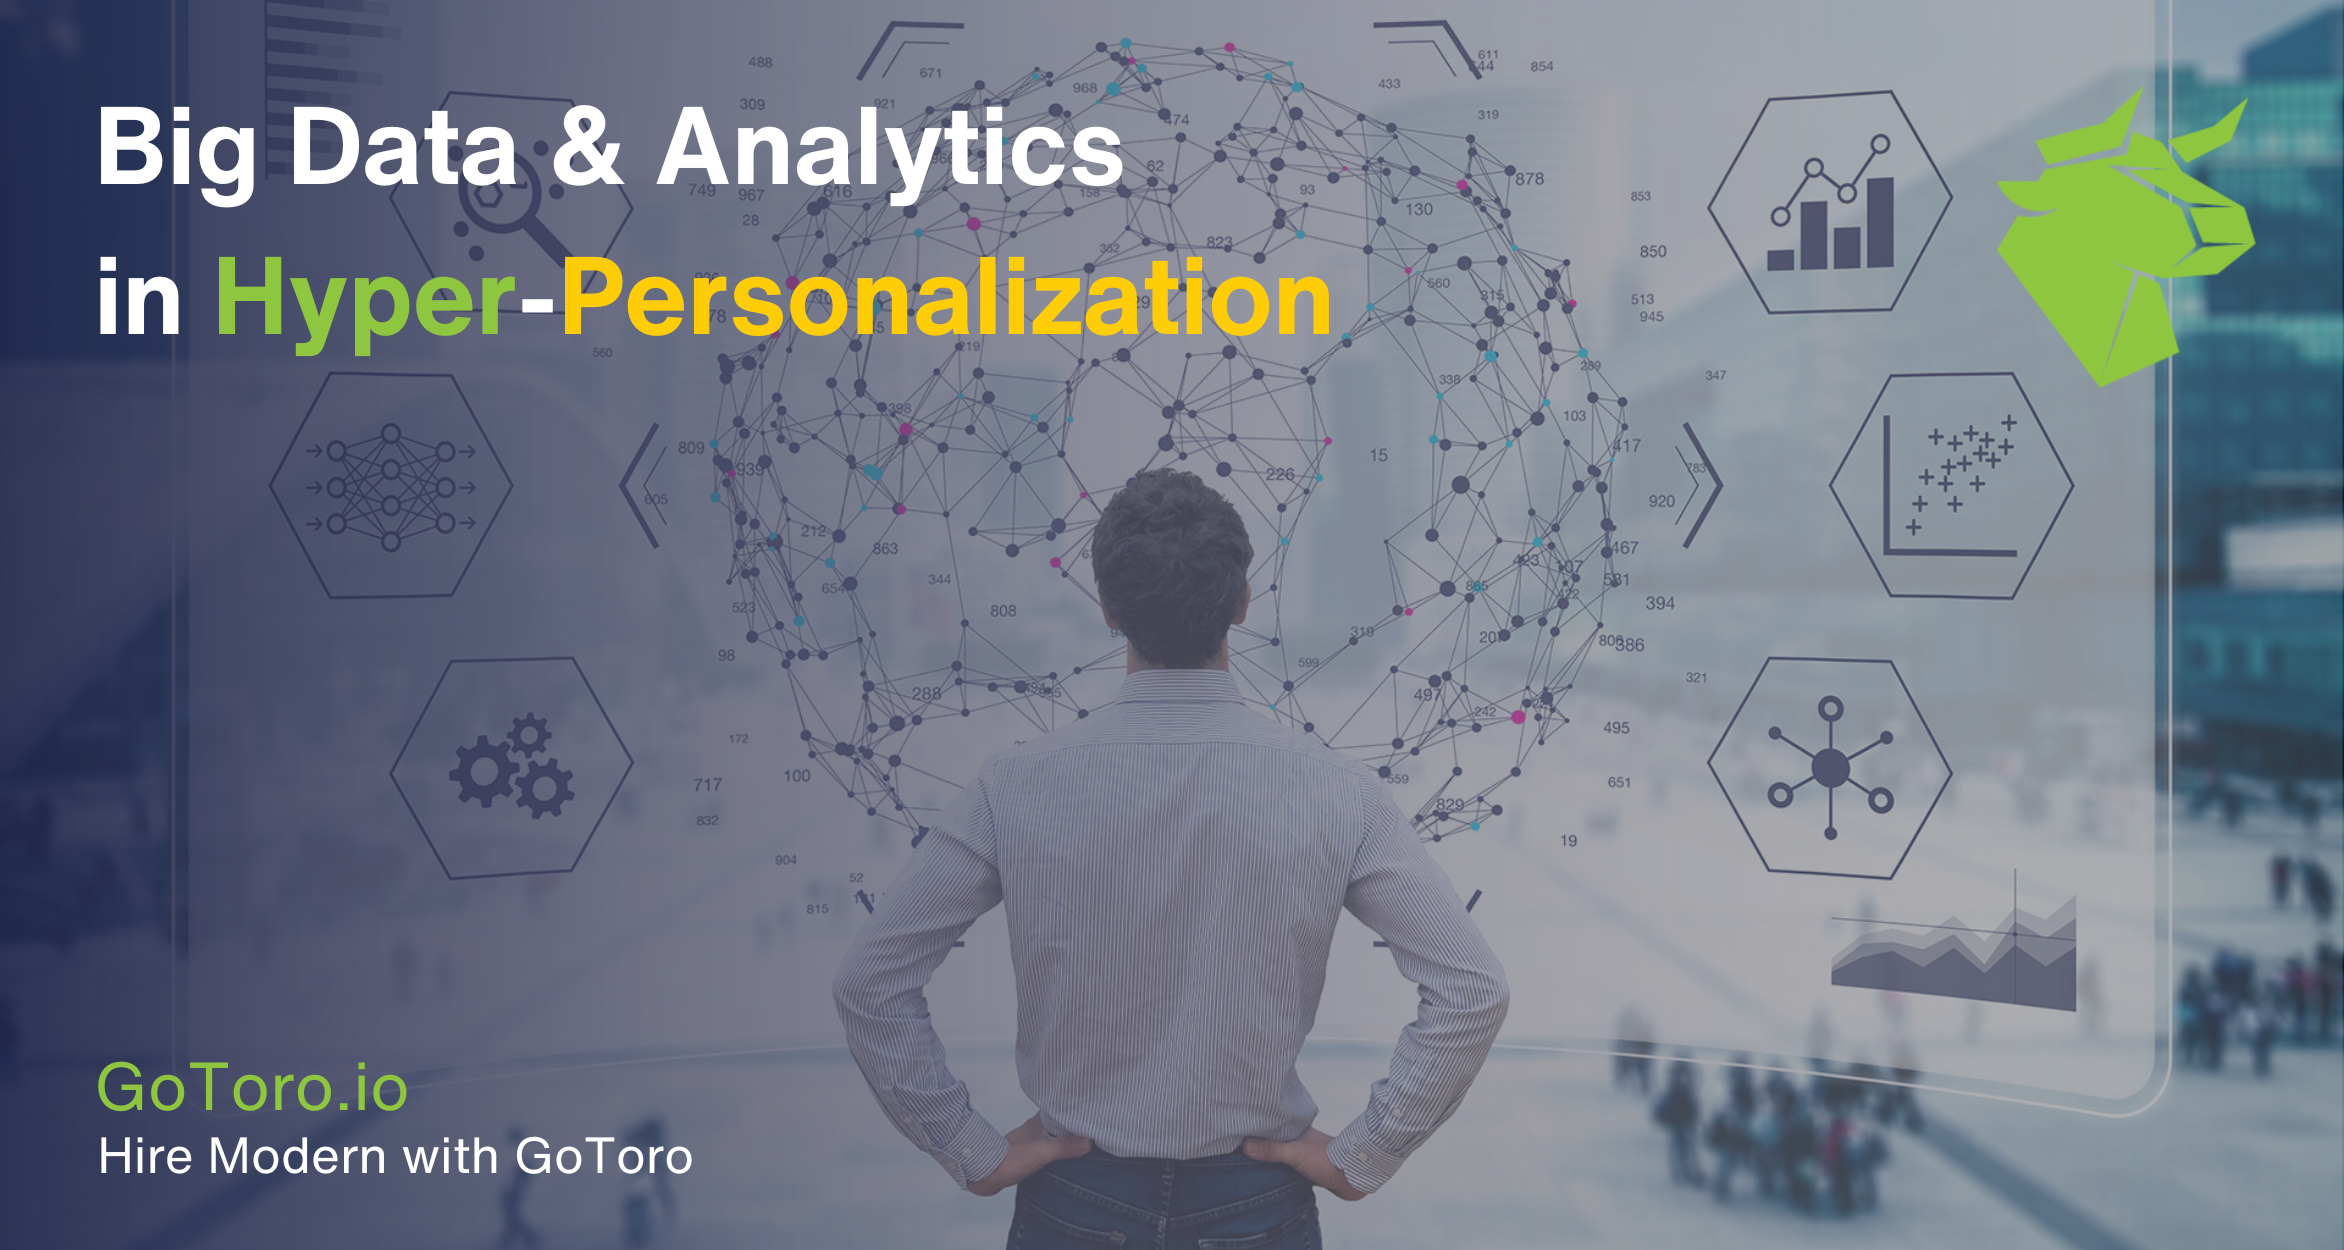 Man analyzing big data for hyper-personalization strategies.